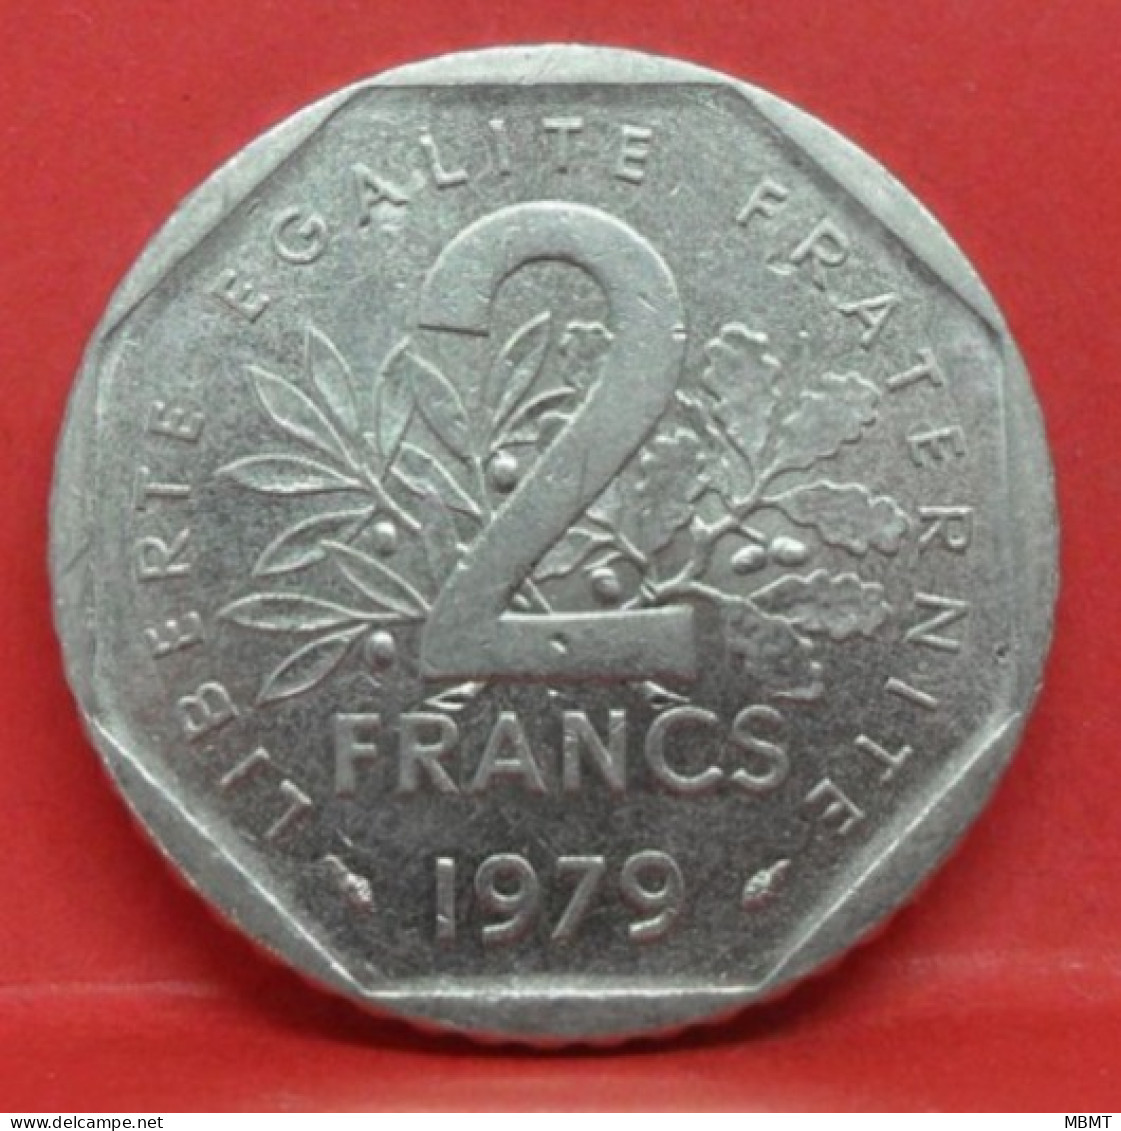 2 Francs Semeuse 1979 - TTB - Pièce Monnaie France - Article N°797 - 2 Francs